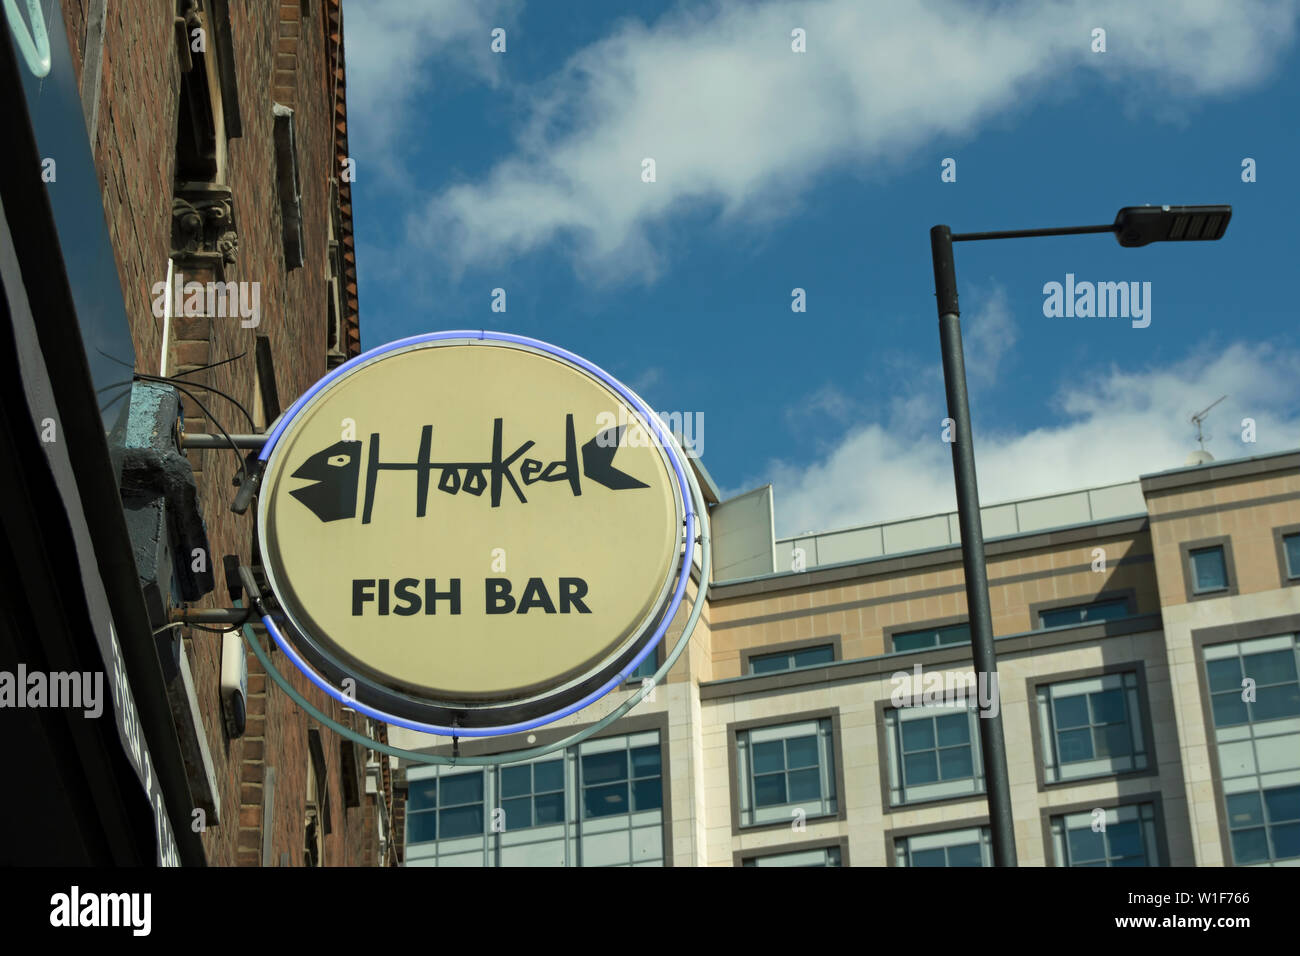 hanging sign for hooked fish bar, hammersmith, london, england, using a fish skeleton image Stock Photo